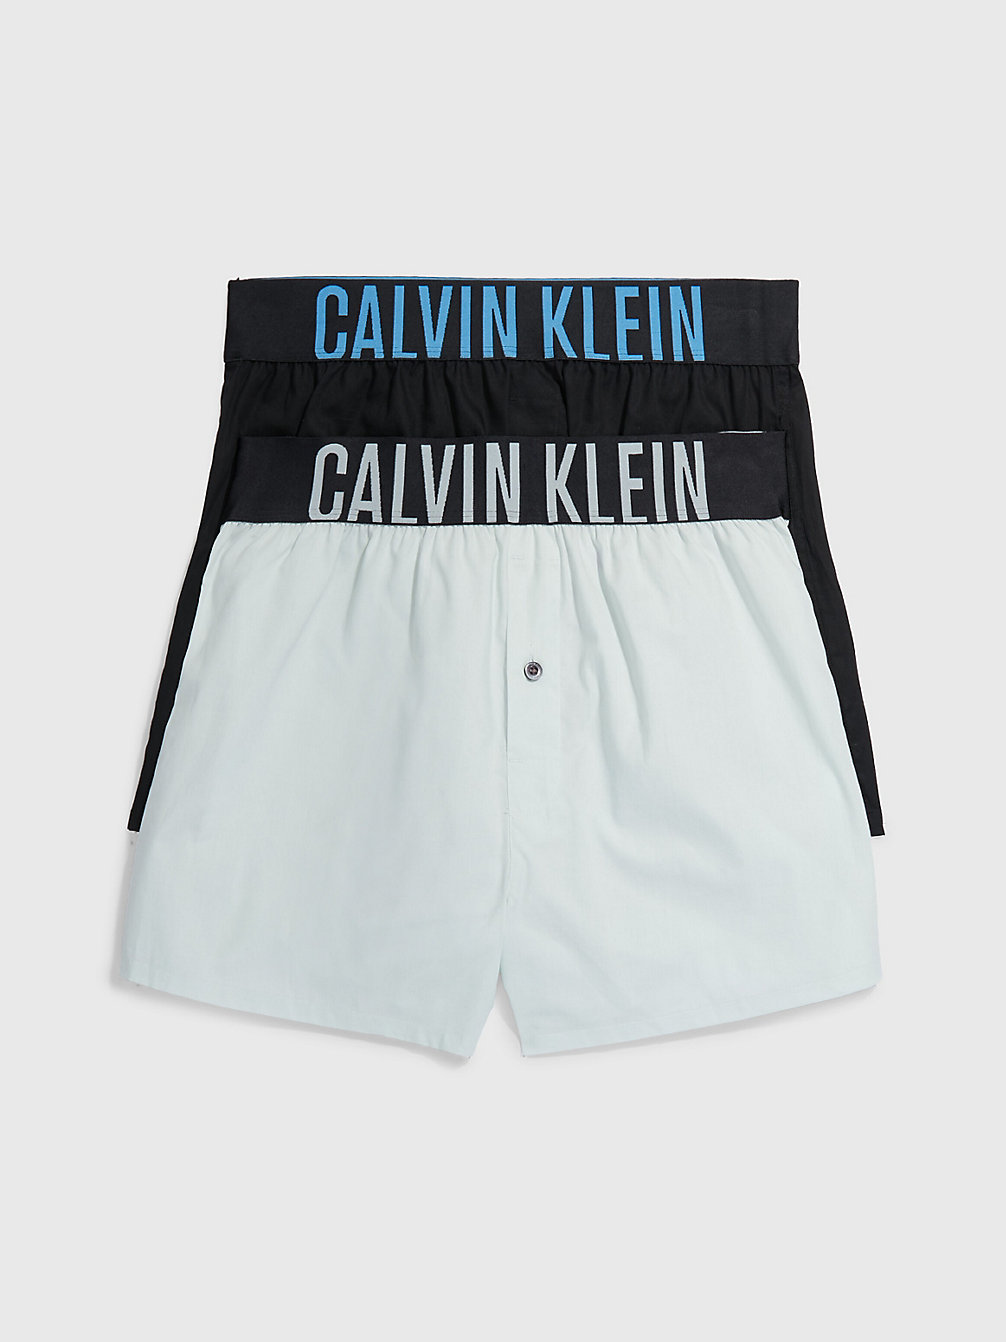 BLACK W/ SIGNATURE BLUE, DRAGON FLY 2er-Pack Slim Fit-Boxershorts - Intense Power undefined Herren Calvin Klein